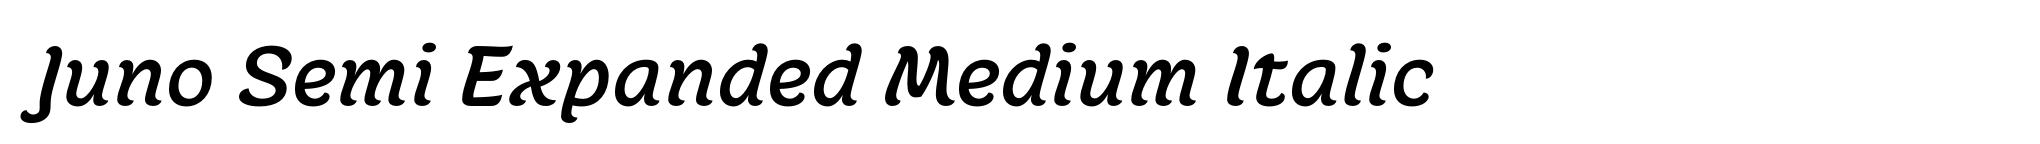 Juno Semi Expanded Medium Italic image